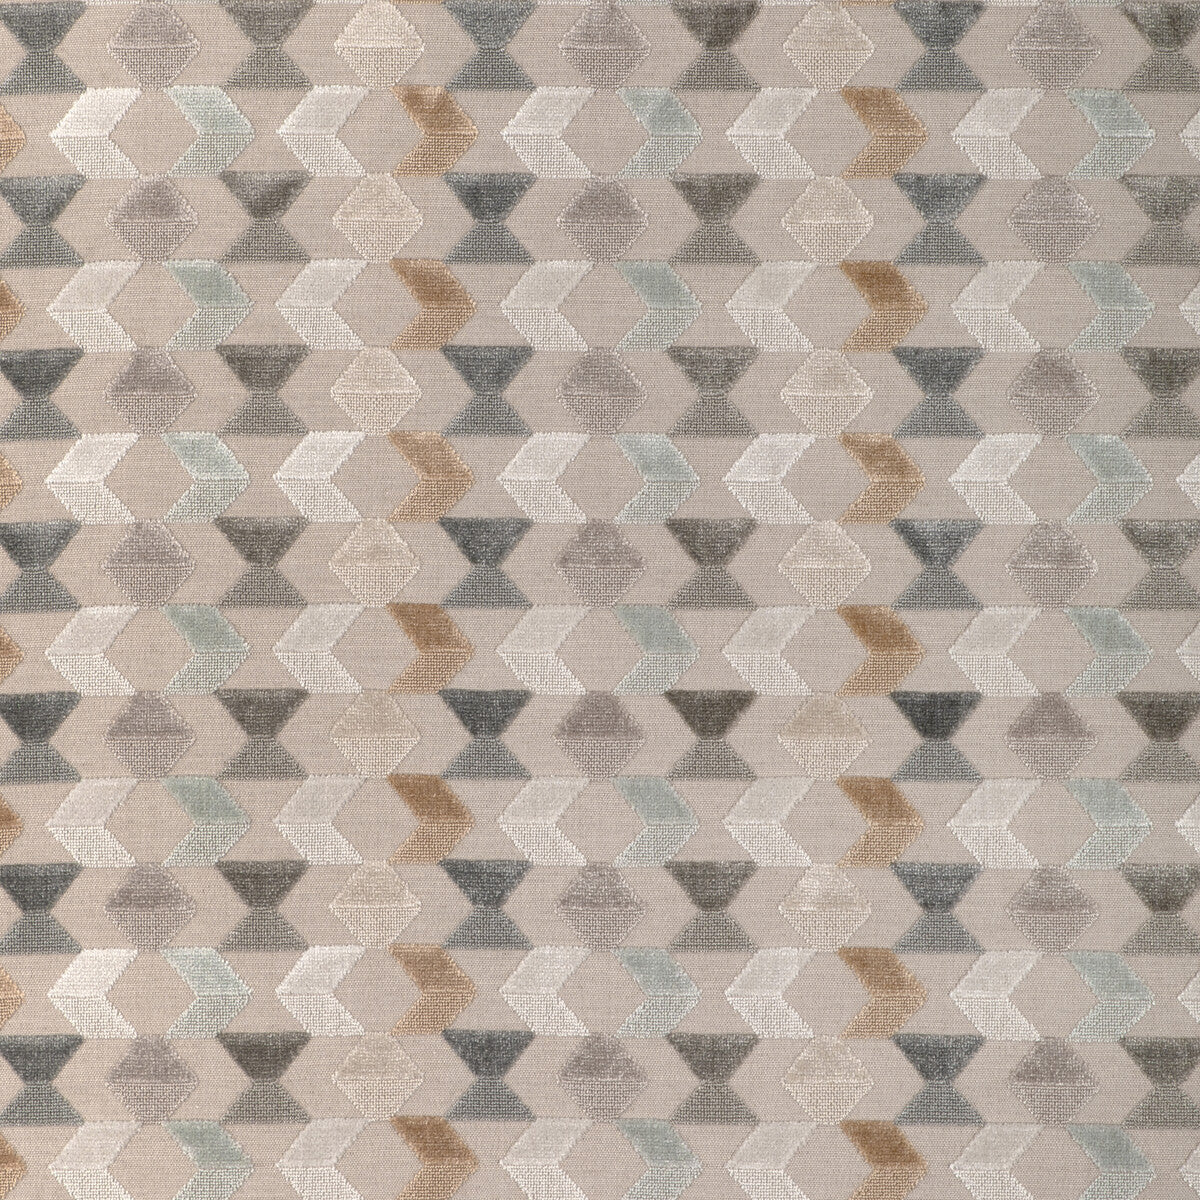 Kravet Design fabric in 36979-1611 color - pattern 36979.1611.0 - by Kravet Design in the Modern Velvets collection